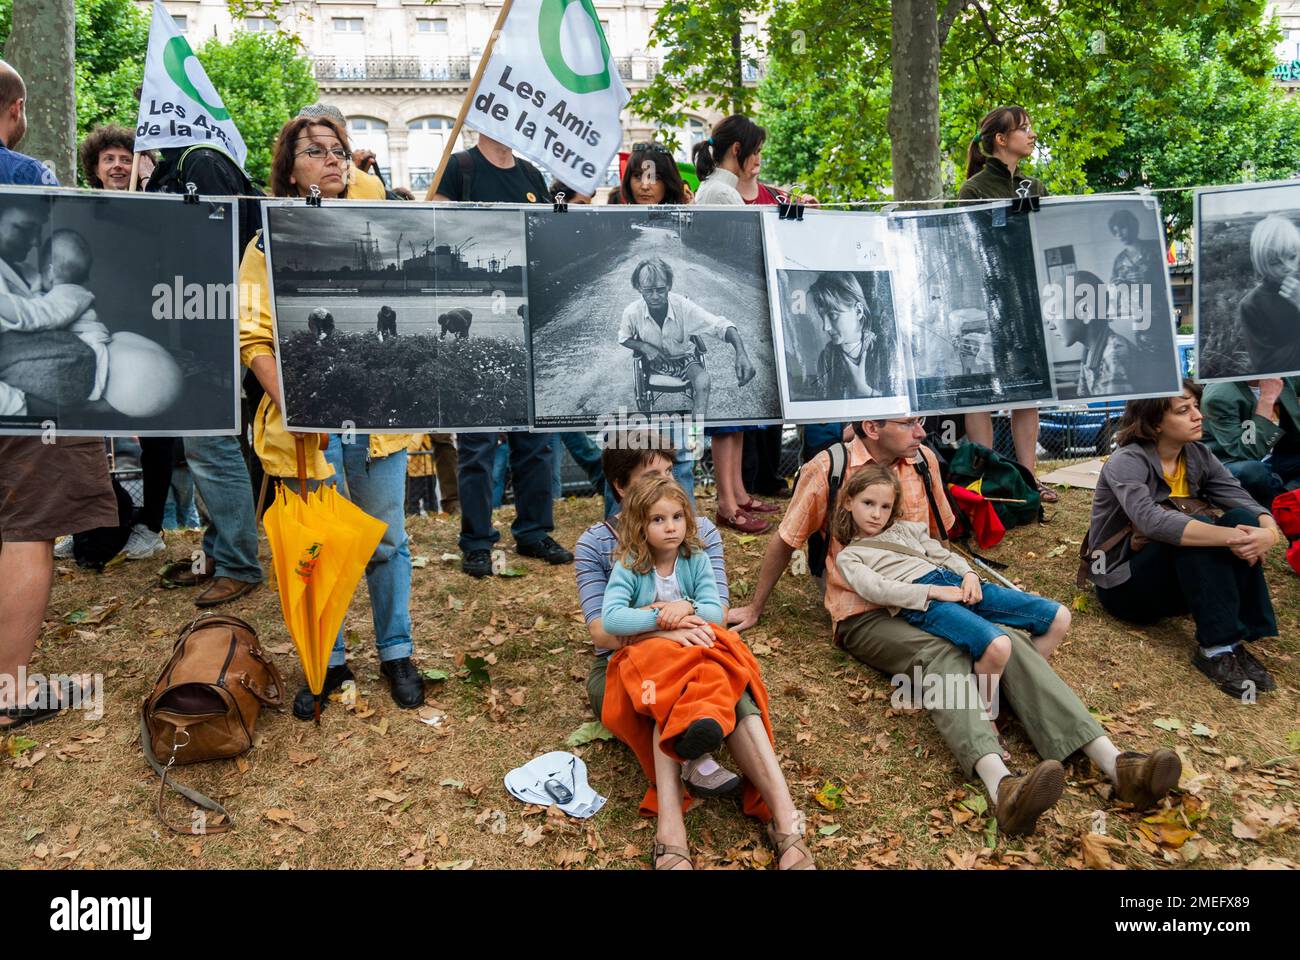 Parigi, FRANCIA - Crowd, Anti-Nuclear Power Demonstration by Environmental N.G.O.'s. Les Amis de la Terre, Mostra fotografica, Famiglia, Banner di protesta, Foto Stock